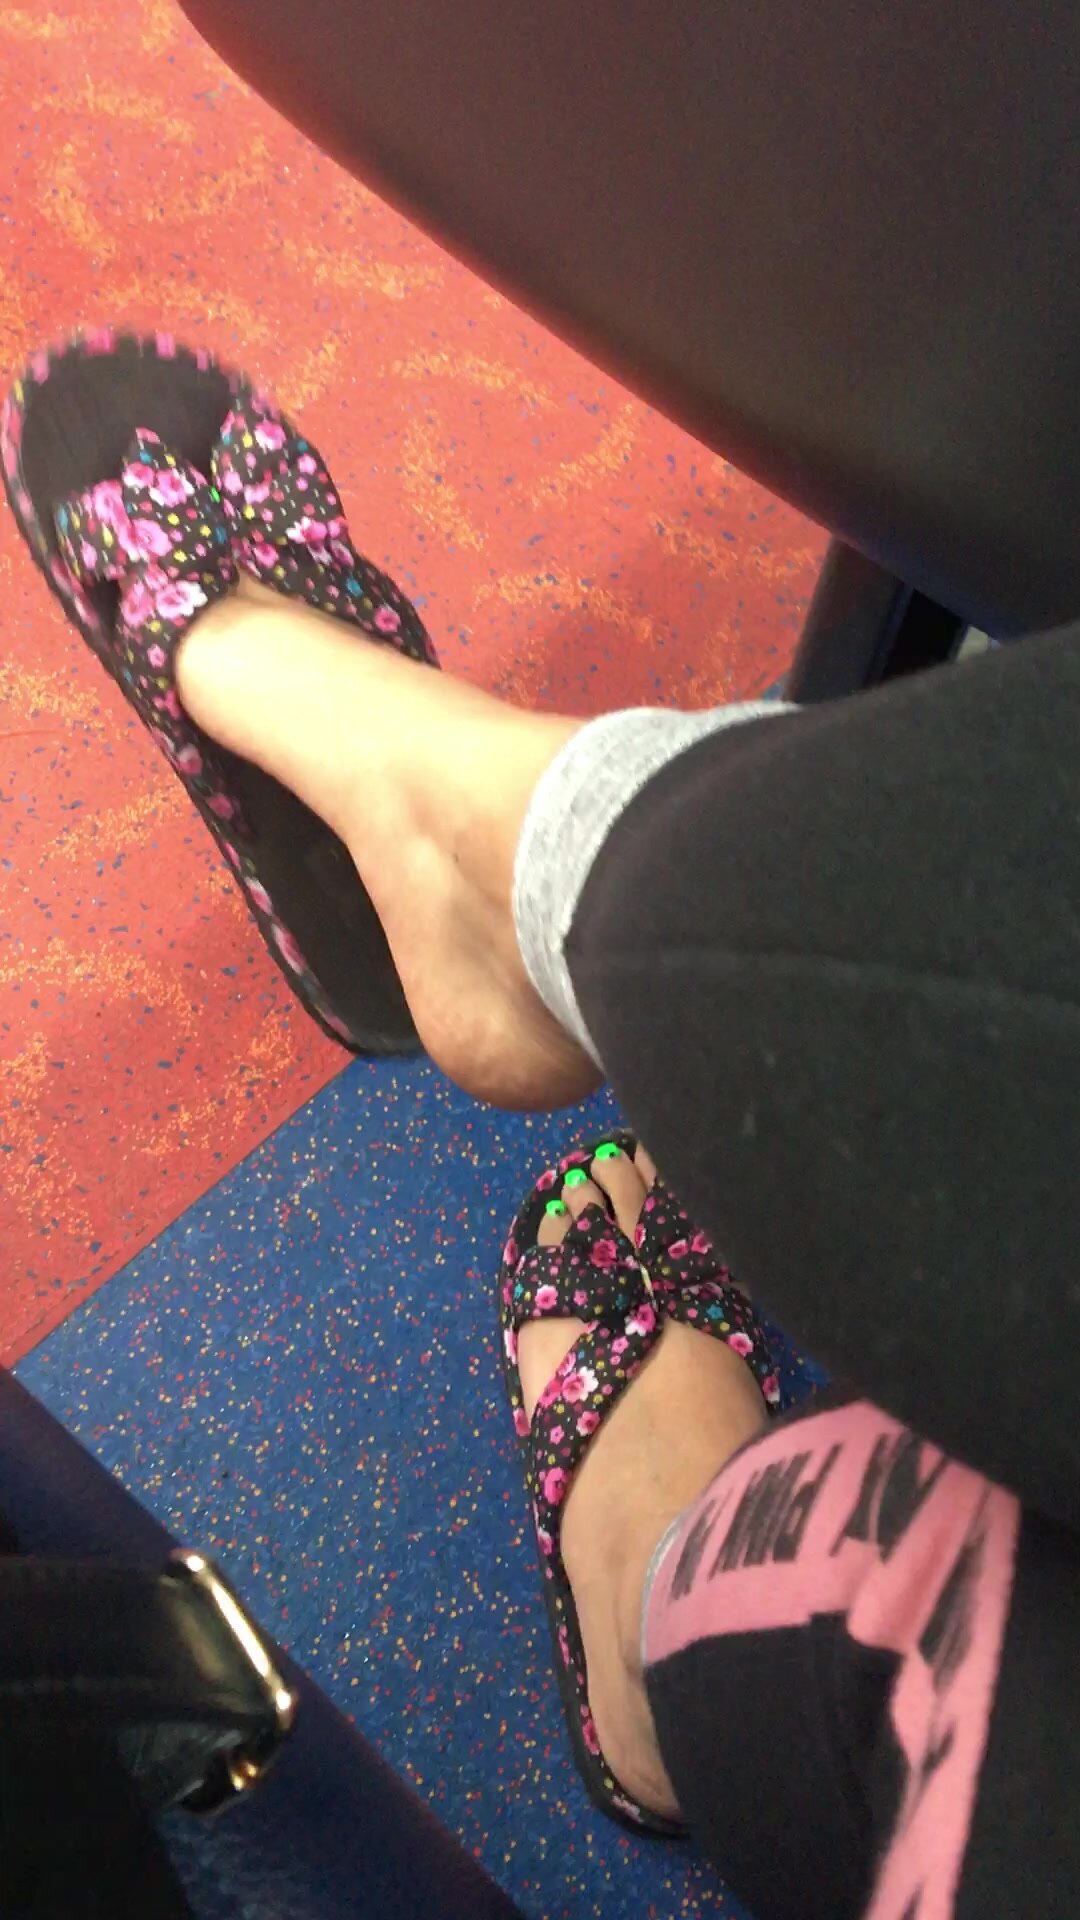 Indian slut foot tease stranger with feet on public bus - ThisVid.com